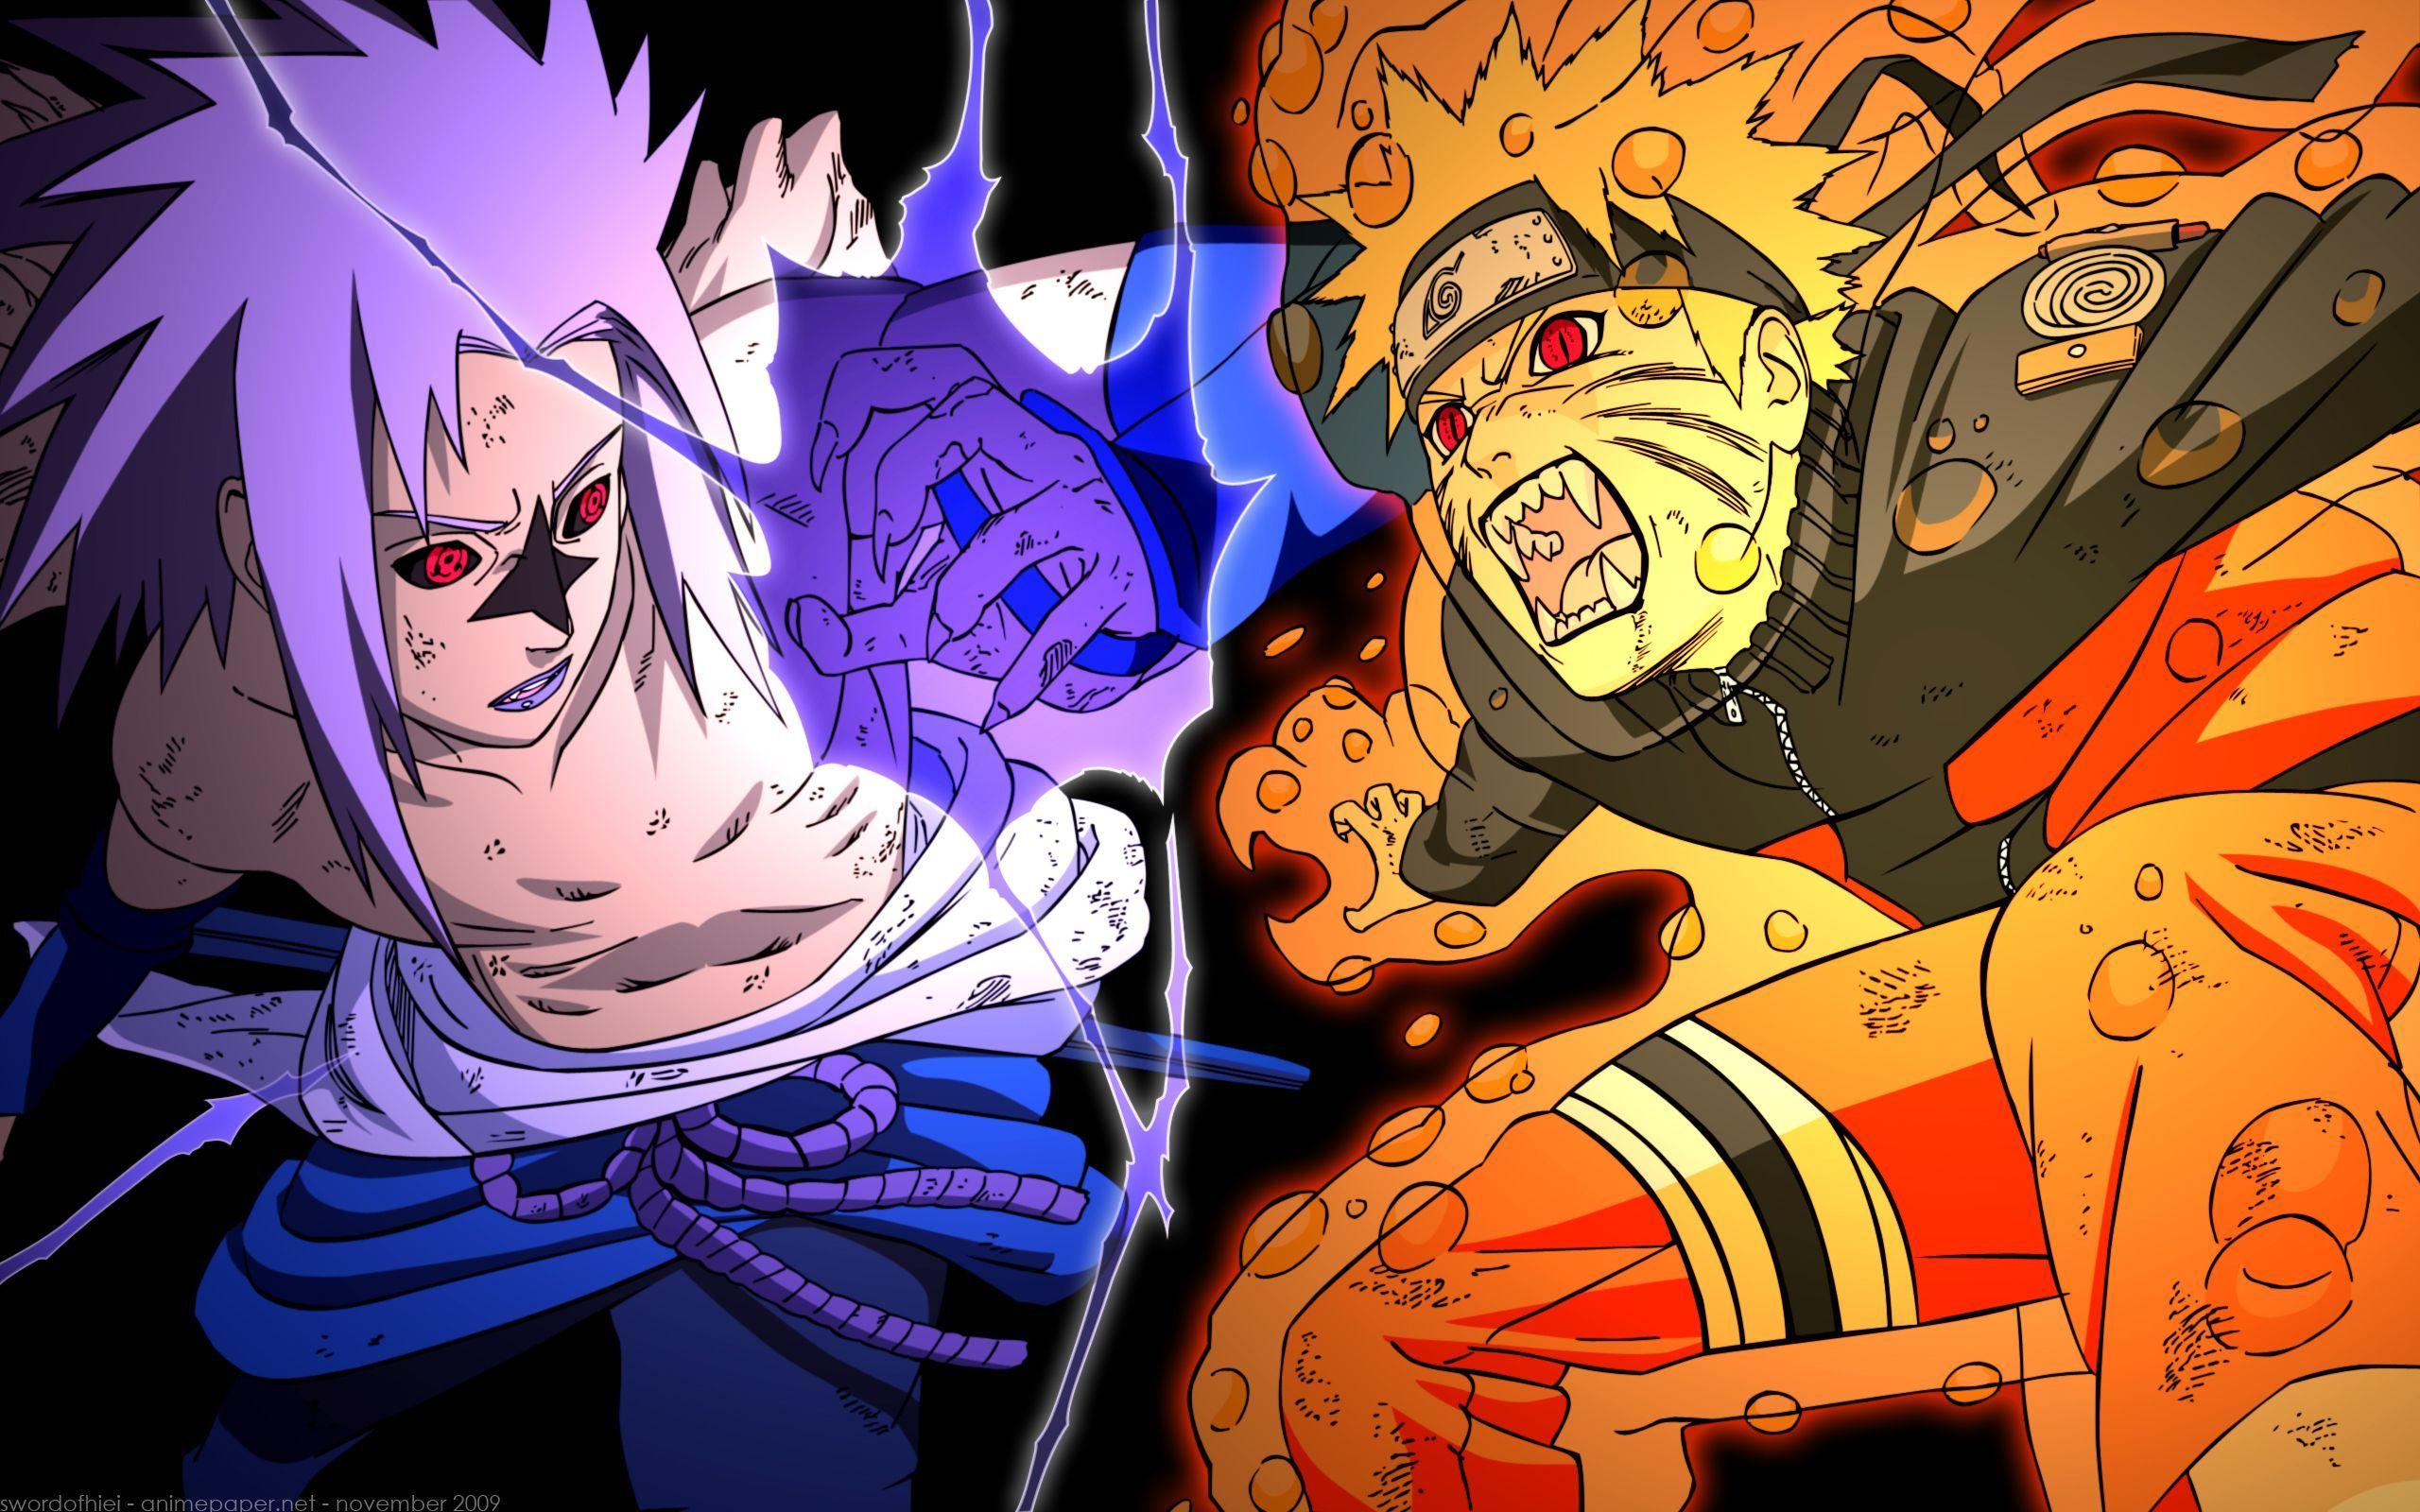 Uzumaki Naruto (Nine Tails mode) vs. Uchiha Sasuke (Curse Mark